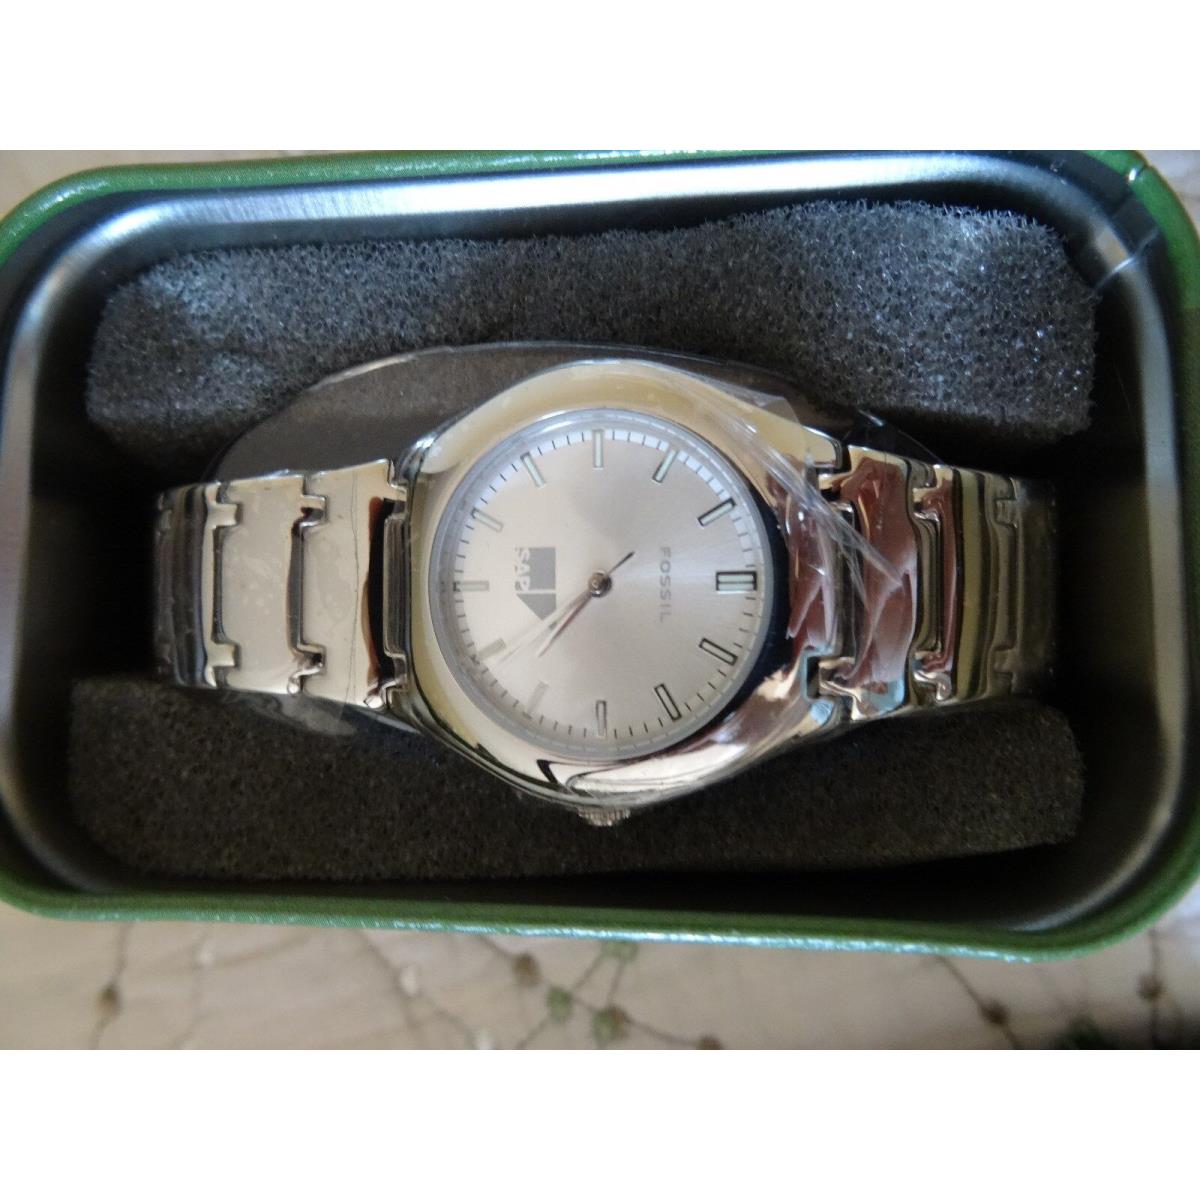 Fossil PR-5031 Stainless Steel Unisex Quartz Wrist Watch - Nice 5